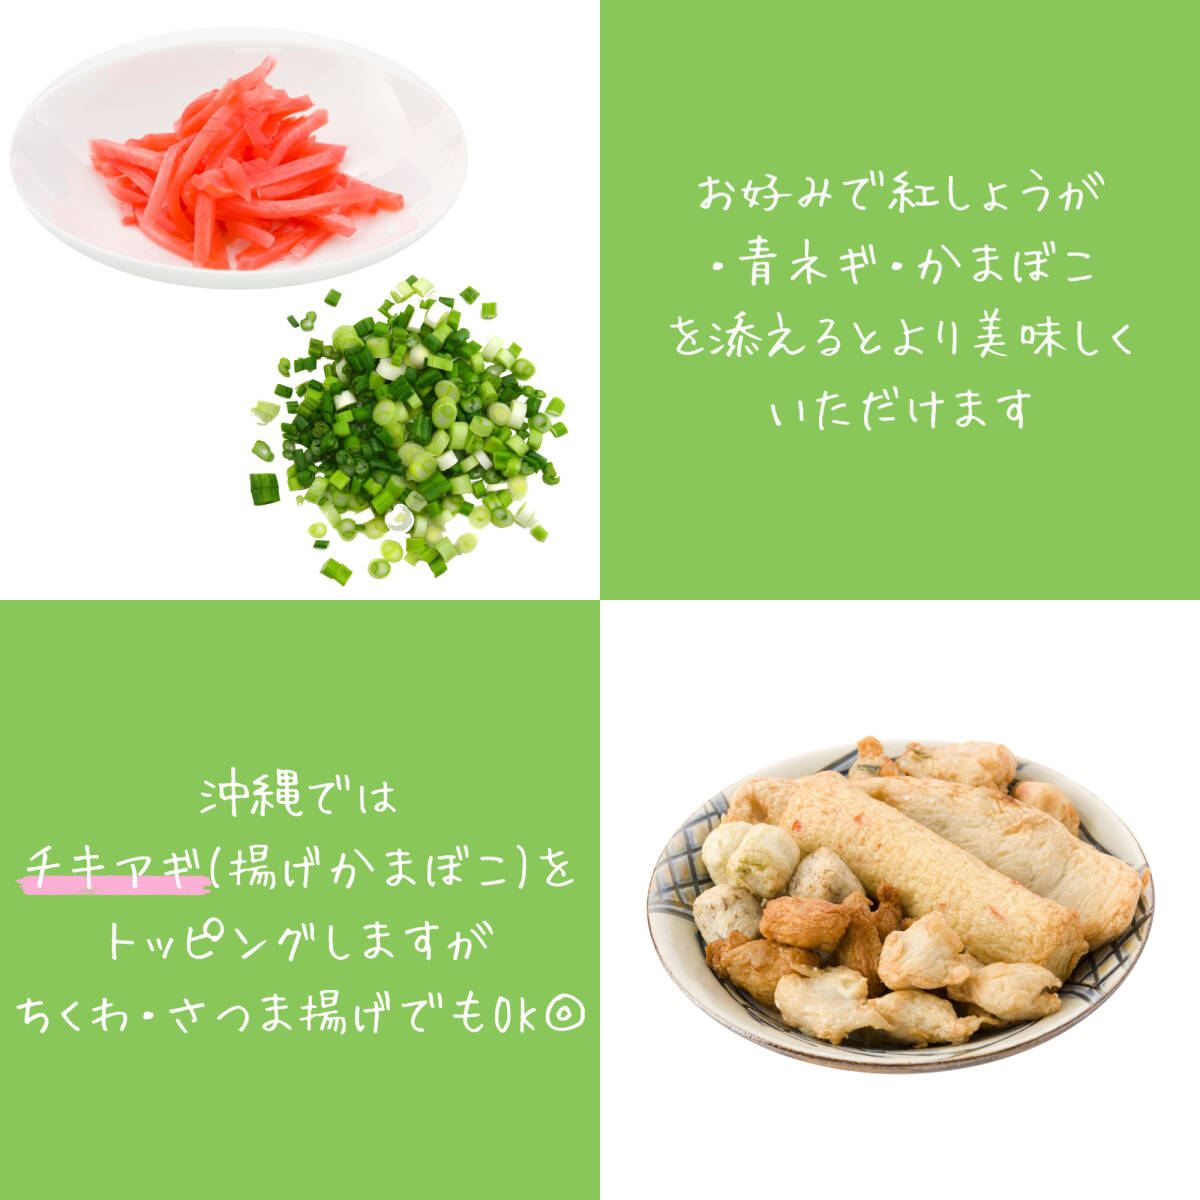  Mix соба 4 порции Okinawa соба . лапша модель соба суп имеется три листов мясо . есть ..so-ki. . есть maru take еда Okinawa сигнал meru рагу рафуте Okinawa . земля производство 